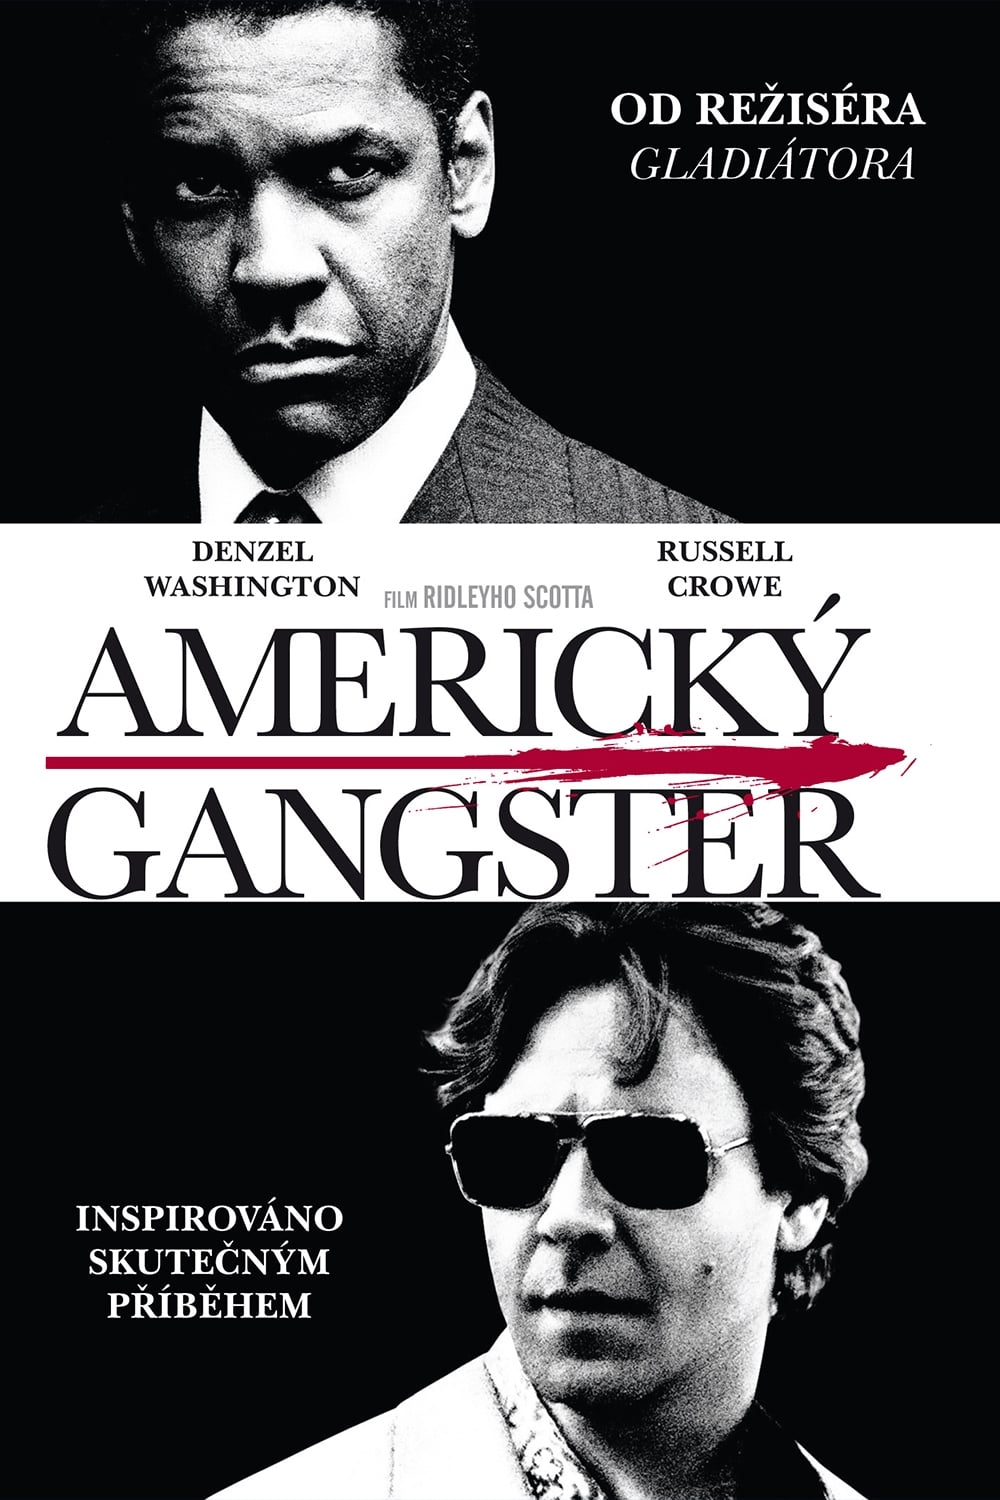 Stiahni si Filmy DVD Americký gangster /  American Gangster  (2007)(CZ/EN)(DVD9) = CSFD 87%